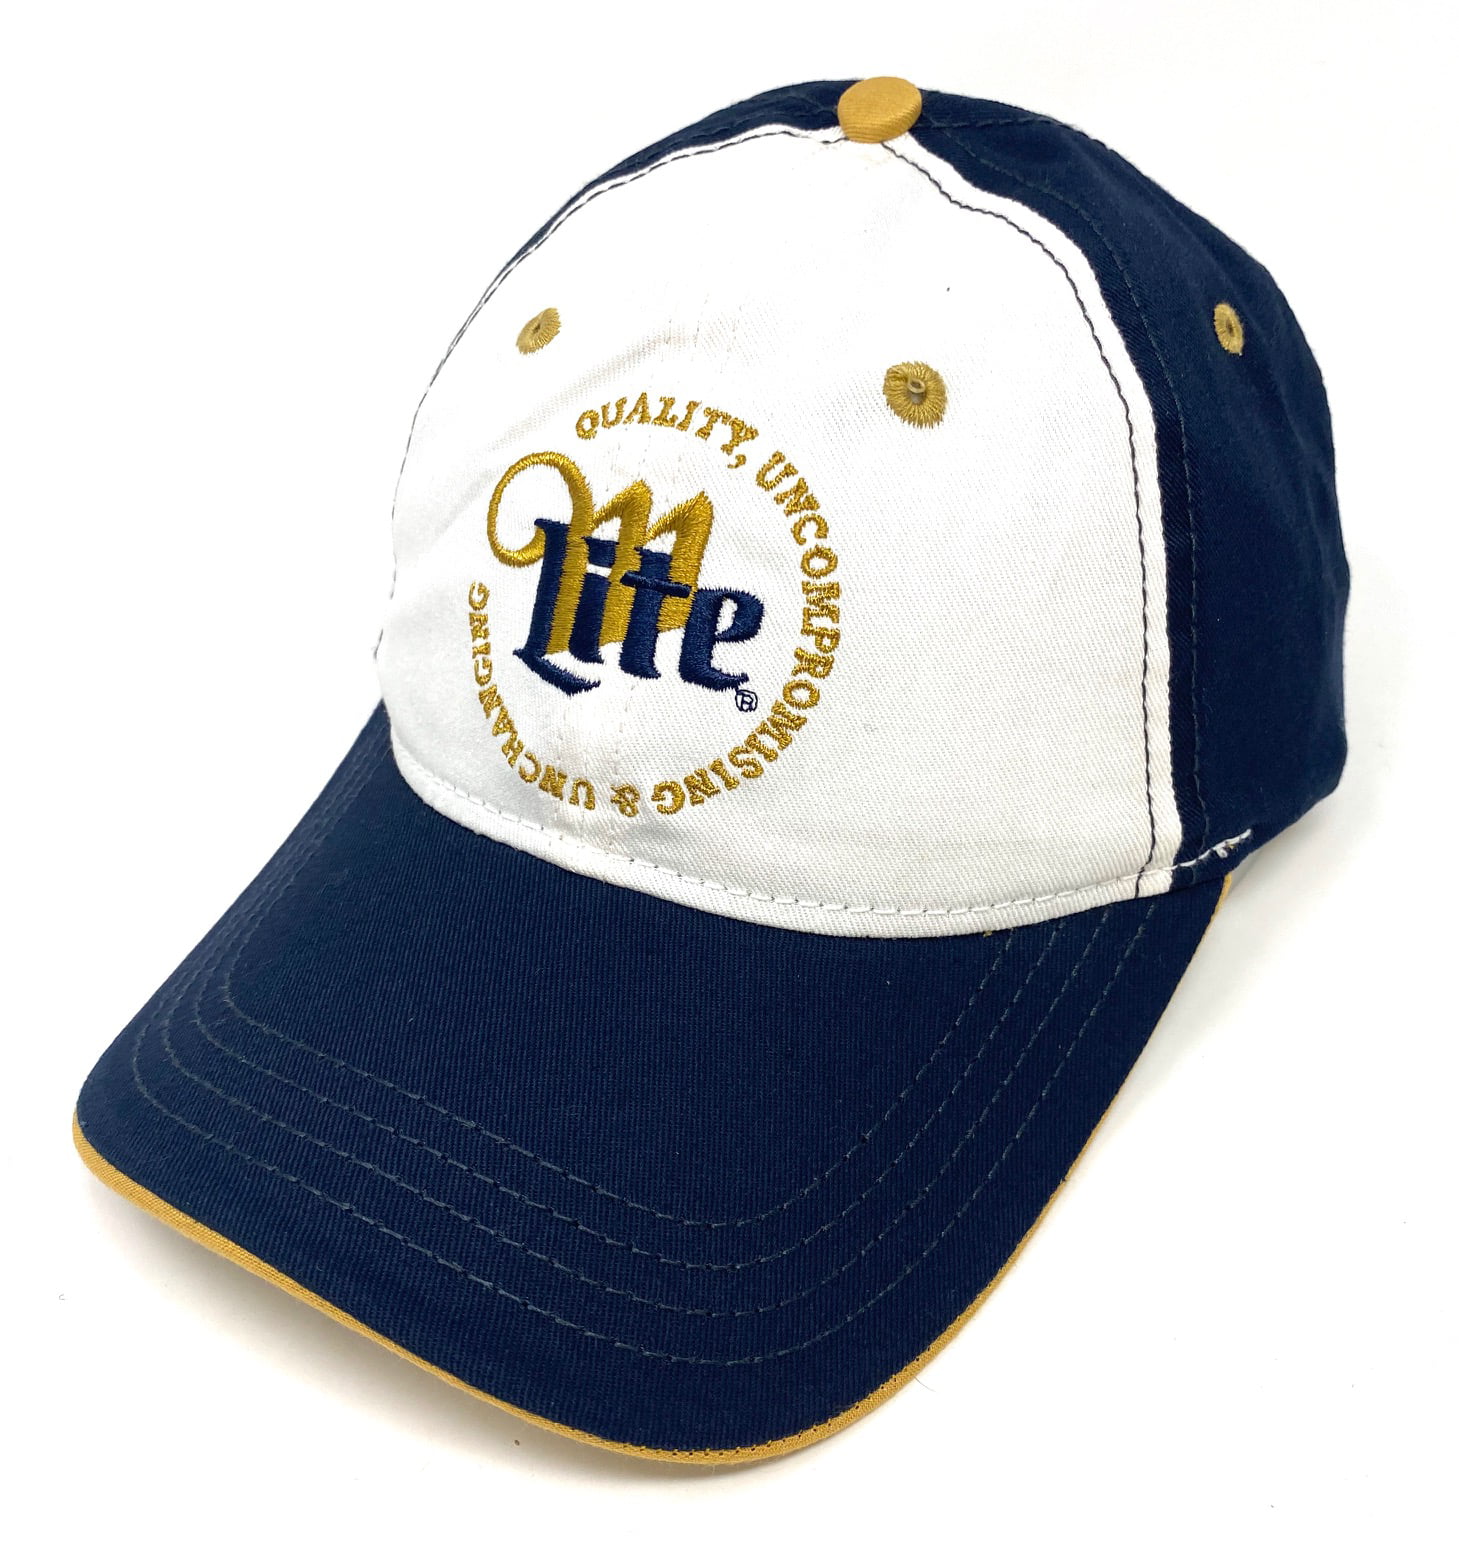 NEW Miller Lite Baseball Cap Snapback Hat 100% Cotton Adjustable One Size Navy 